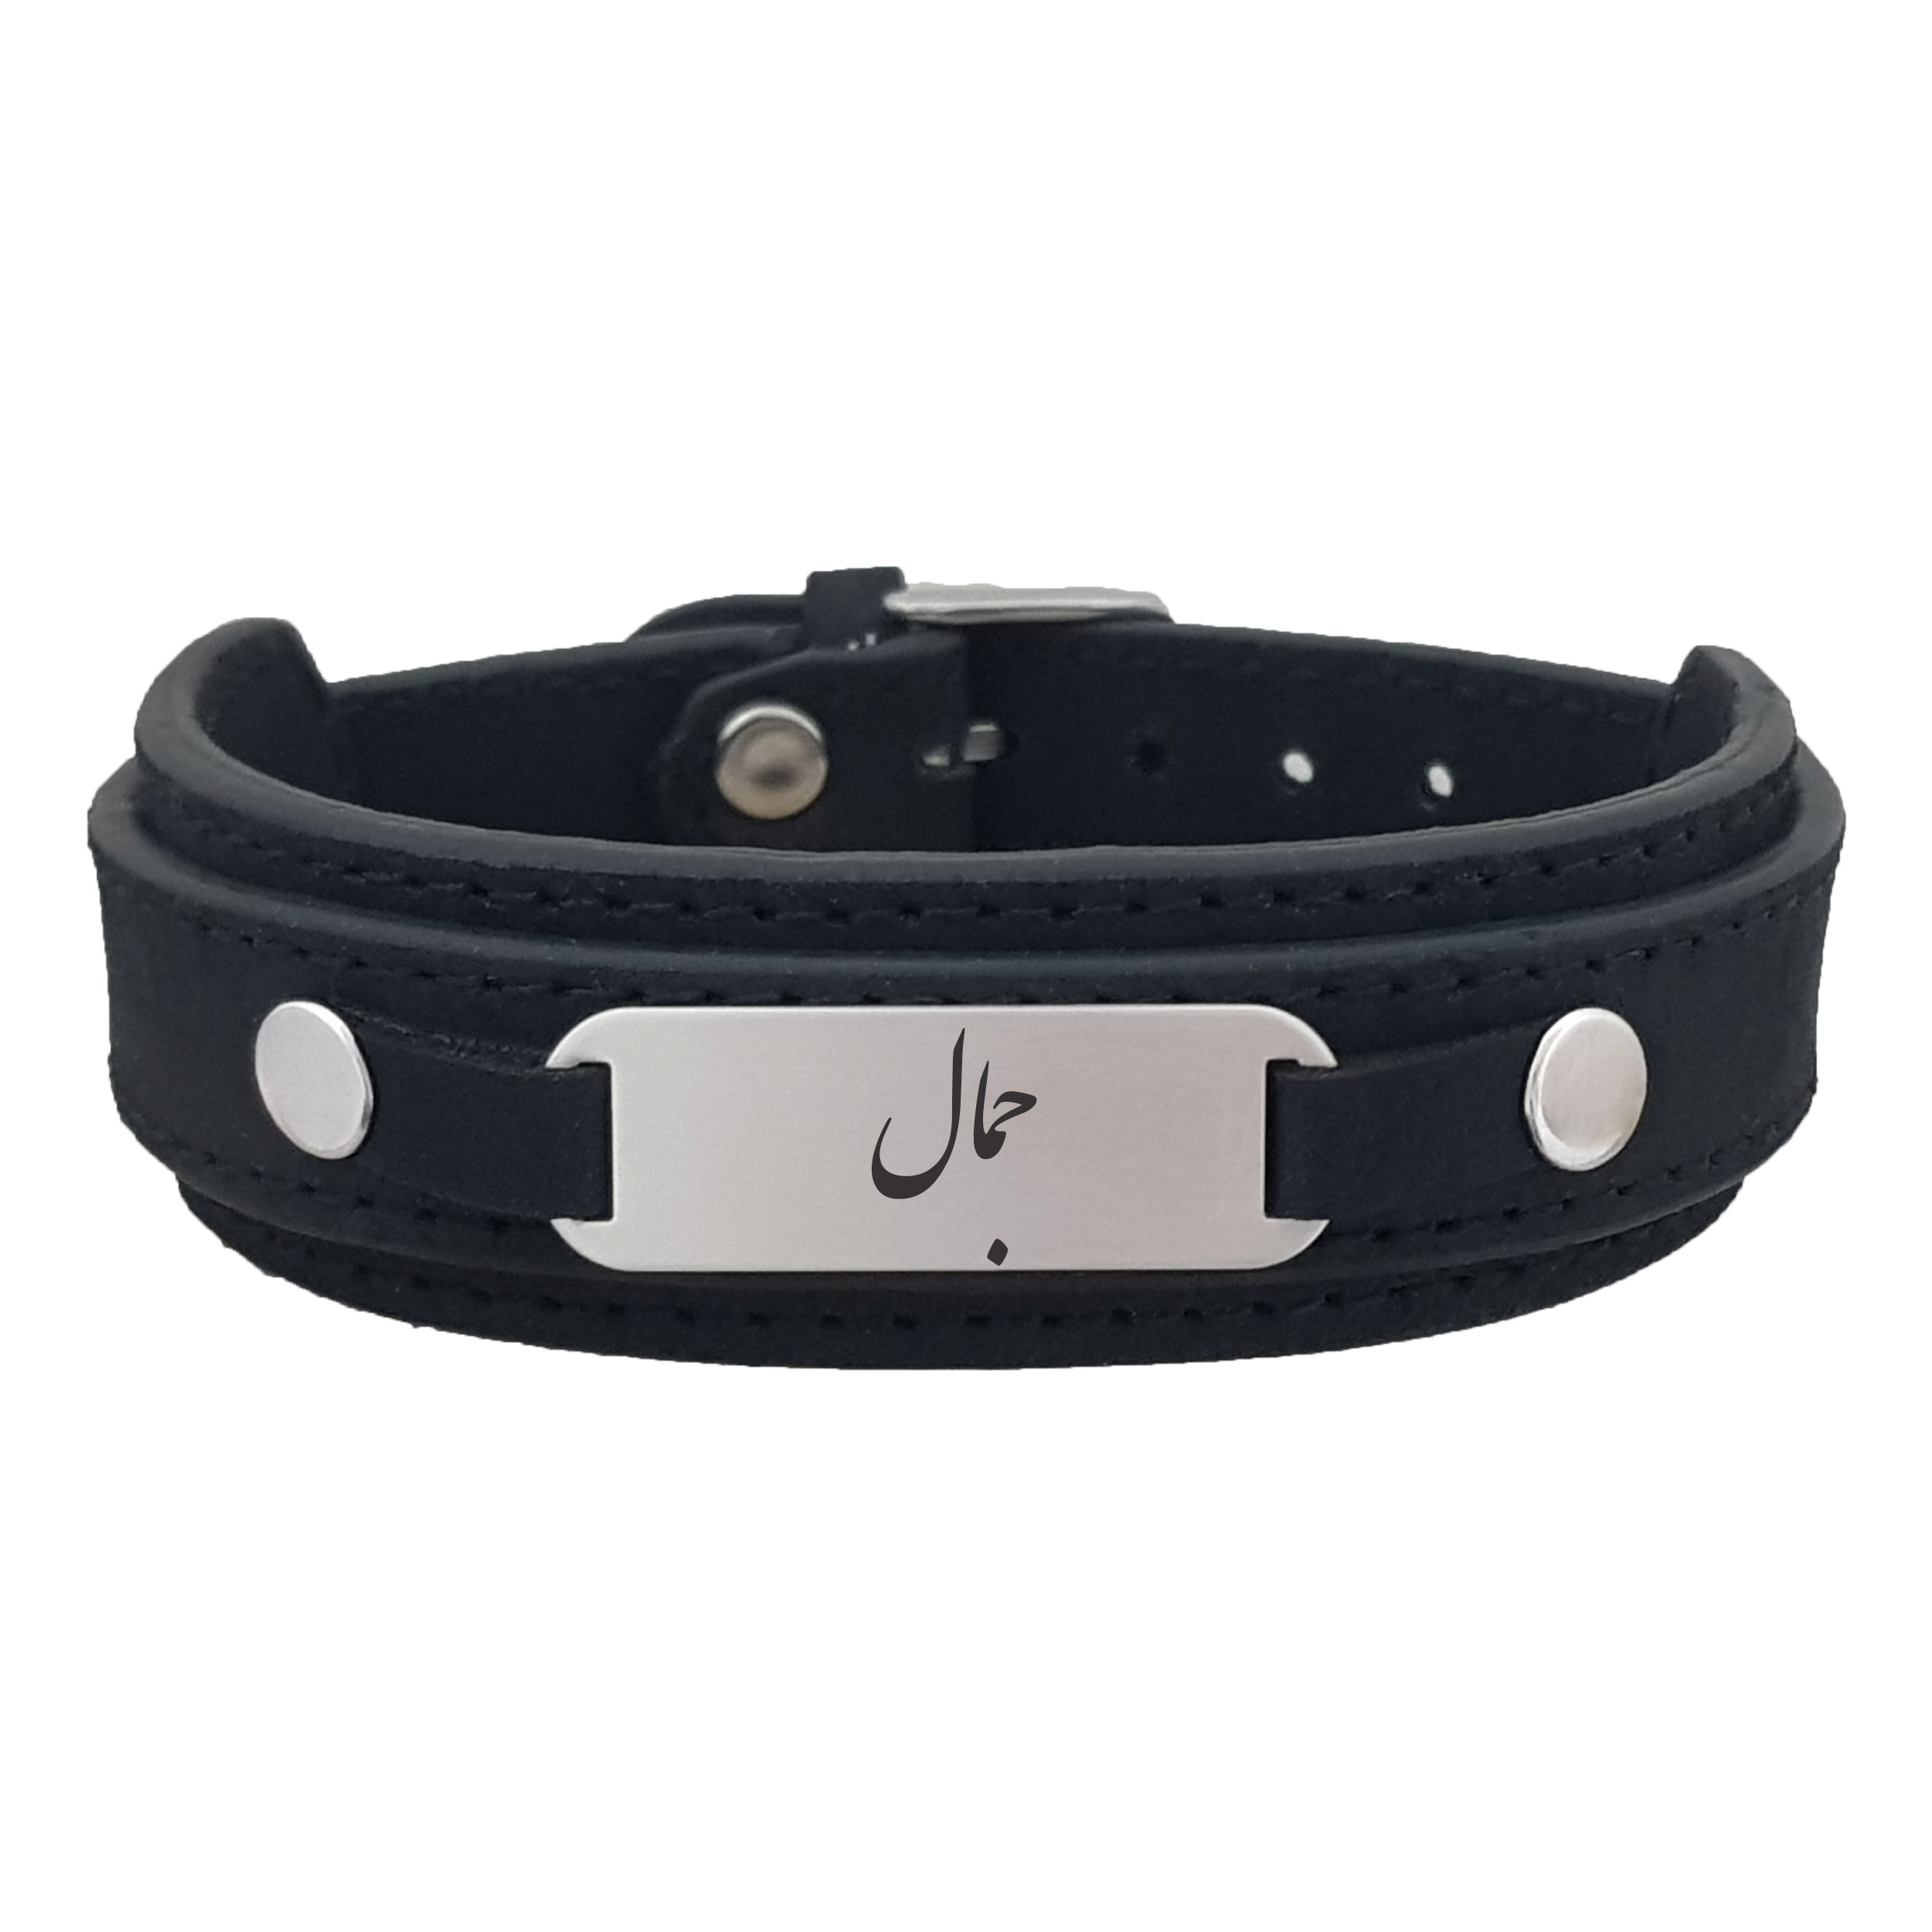 دستبند نقره مردانه ترمه ۱ مدل جمال کد Dcsf0202